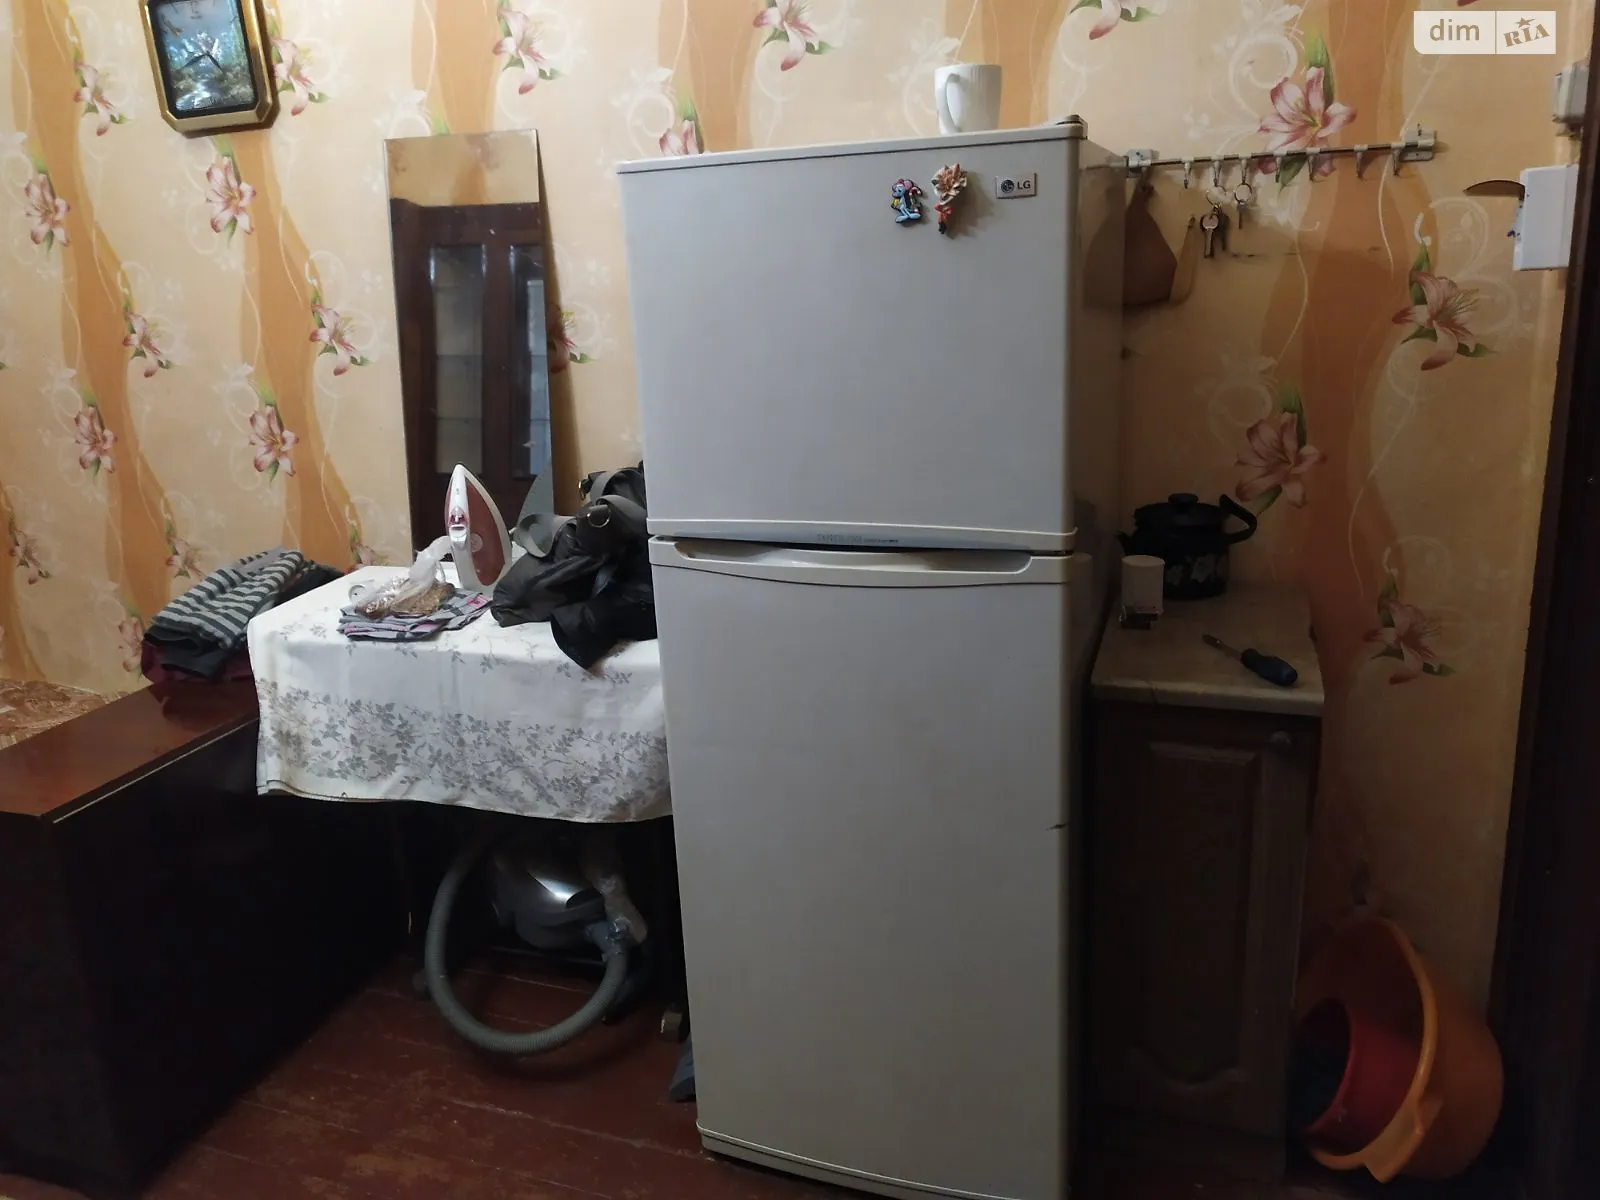 Продается комната 14.3 кв. м в Одессе, цена: 10900 $ - фото 1